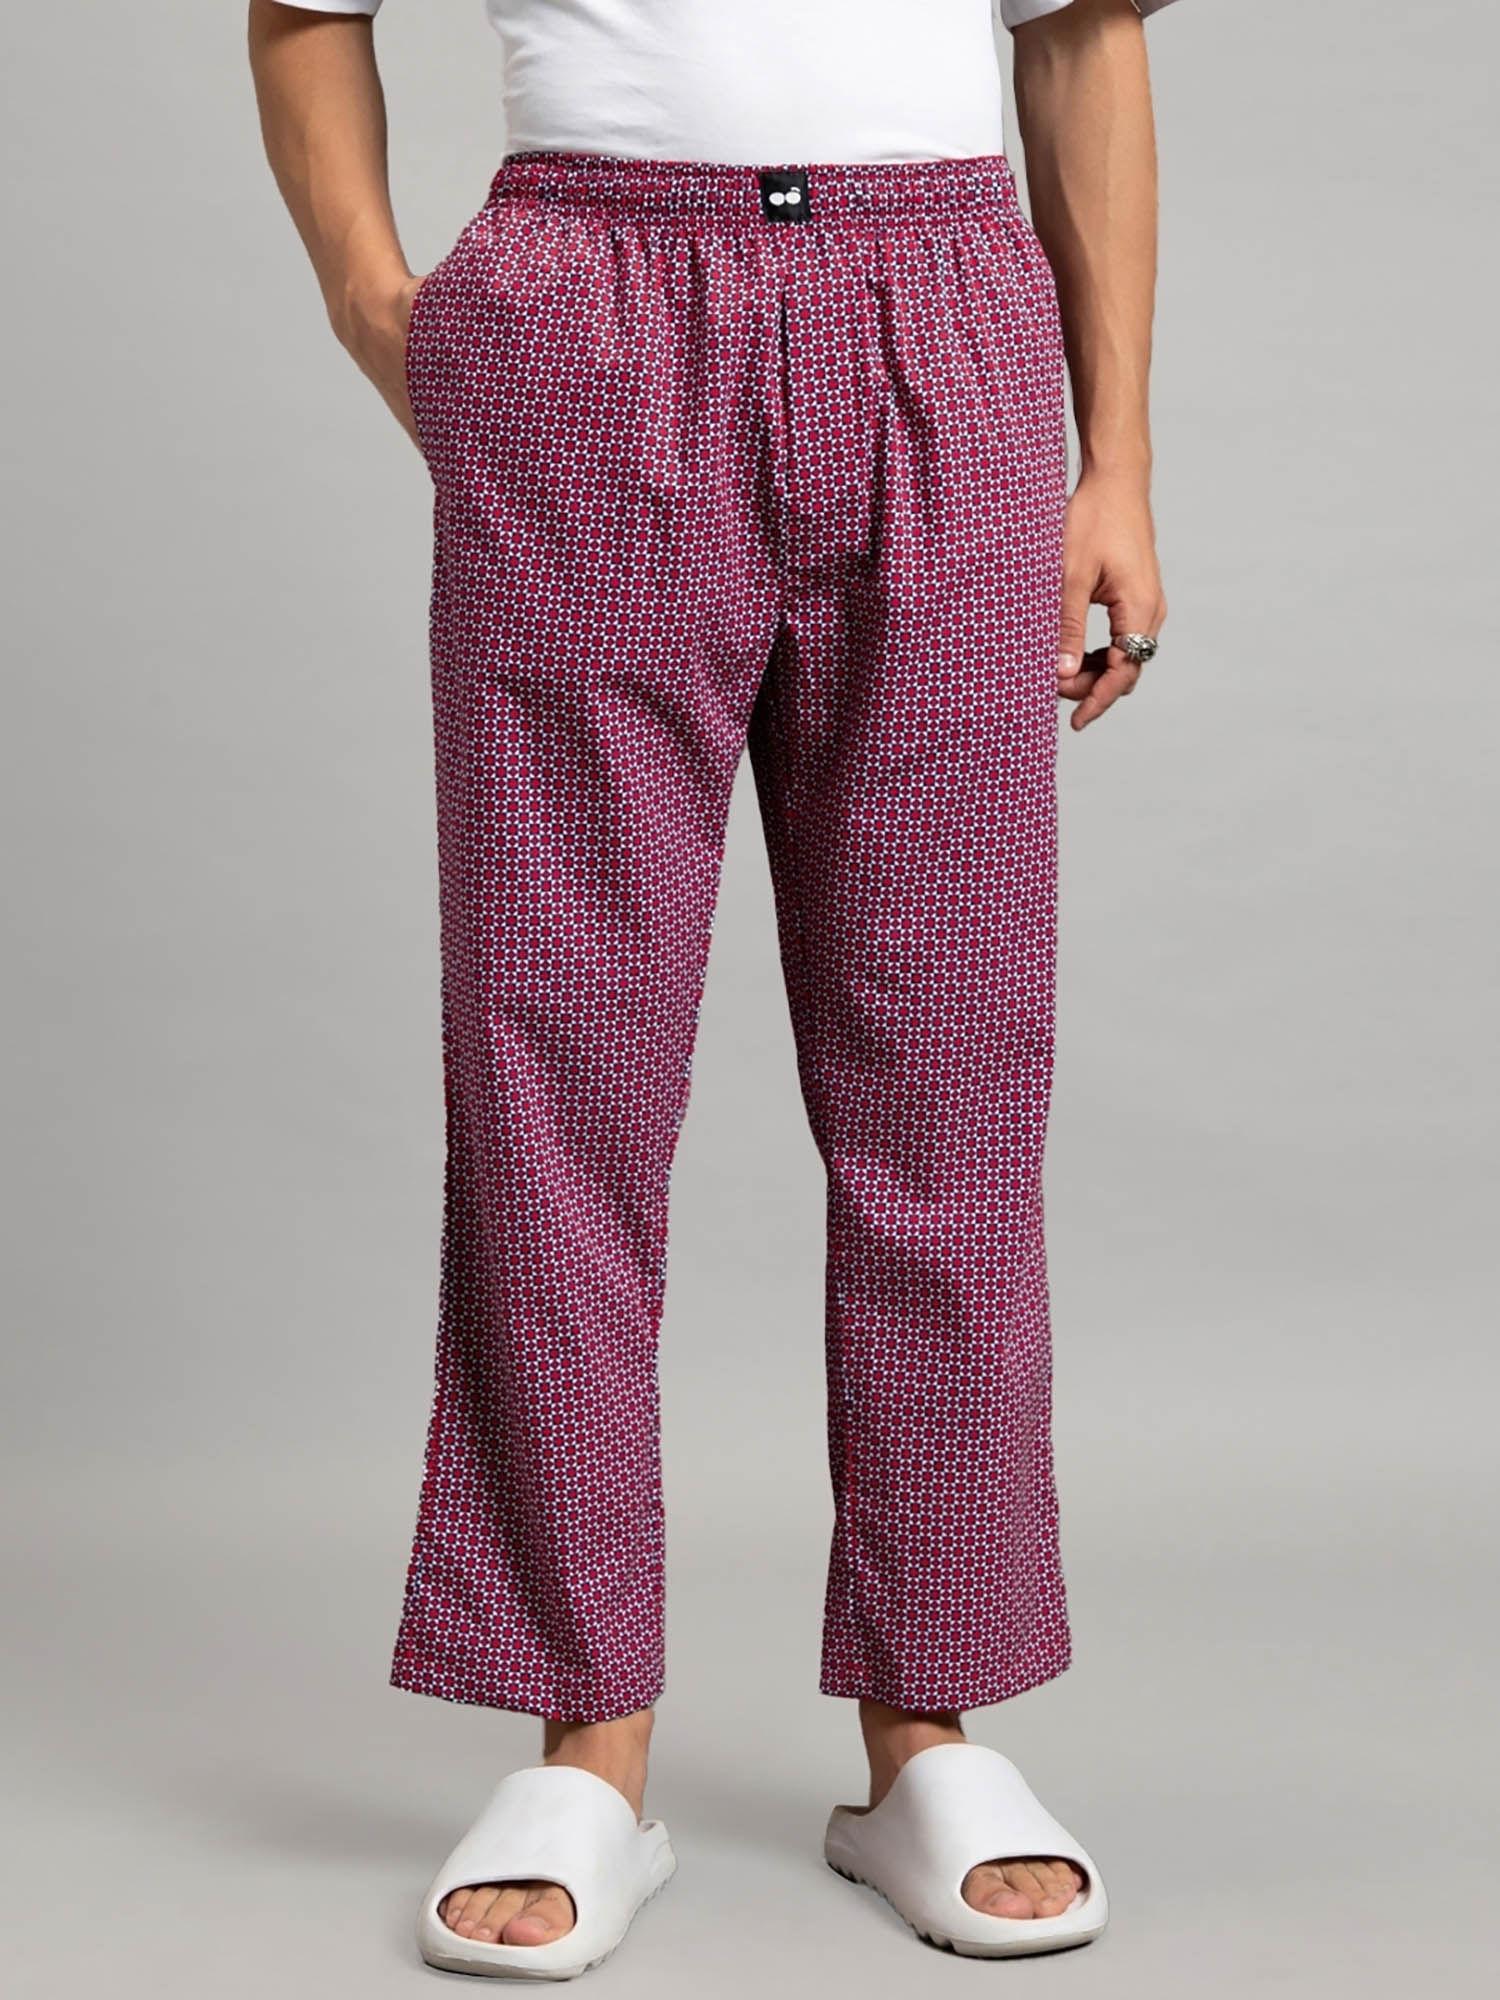 Men's Pink All Over Printed Pyjamas